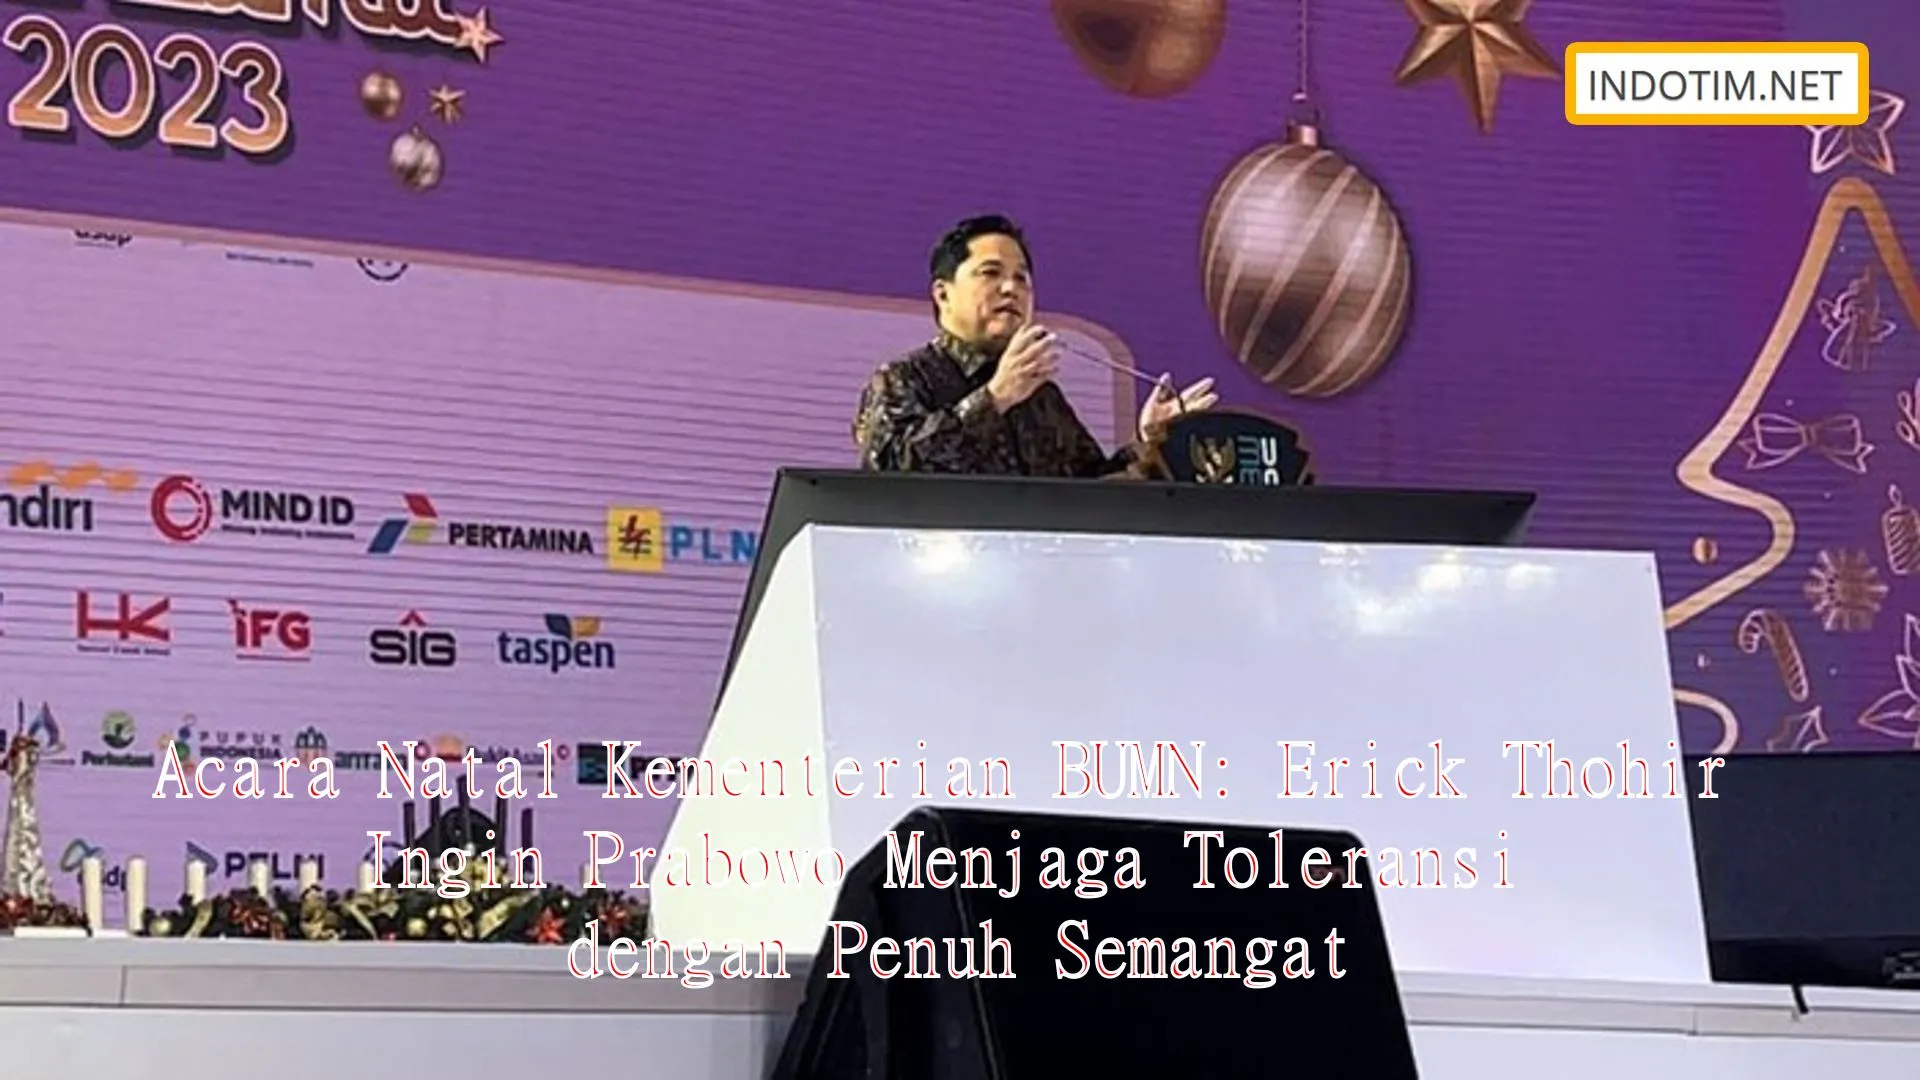 Acara Natal Kementerian BUMN: Erick Thohir Ingin Prabowo Menjaga Toleransi dengan Penuh Semangat